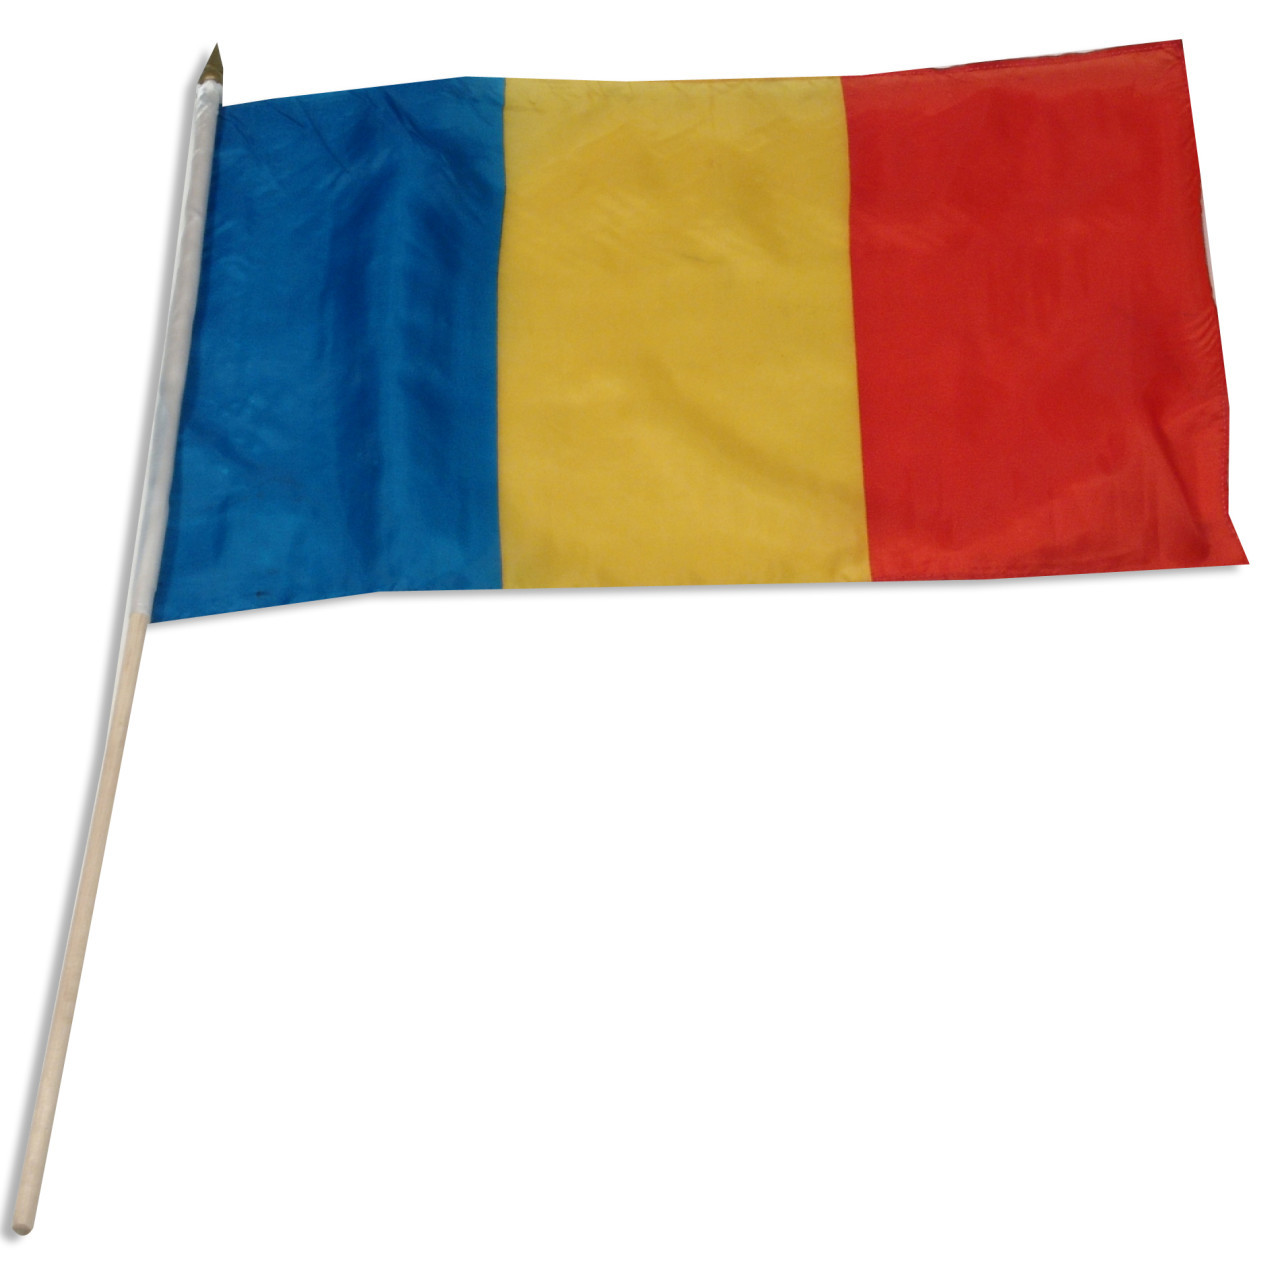 Romania flag 12 x 18 inch